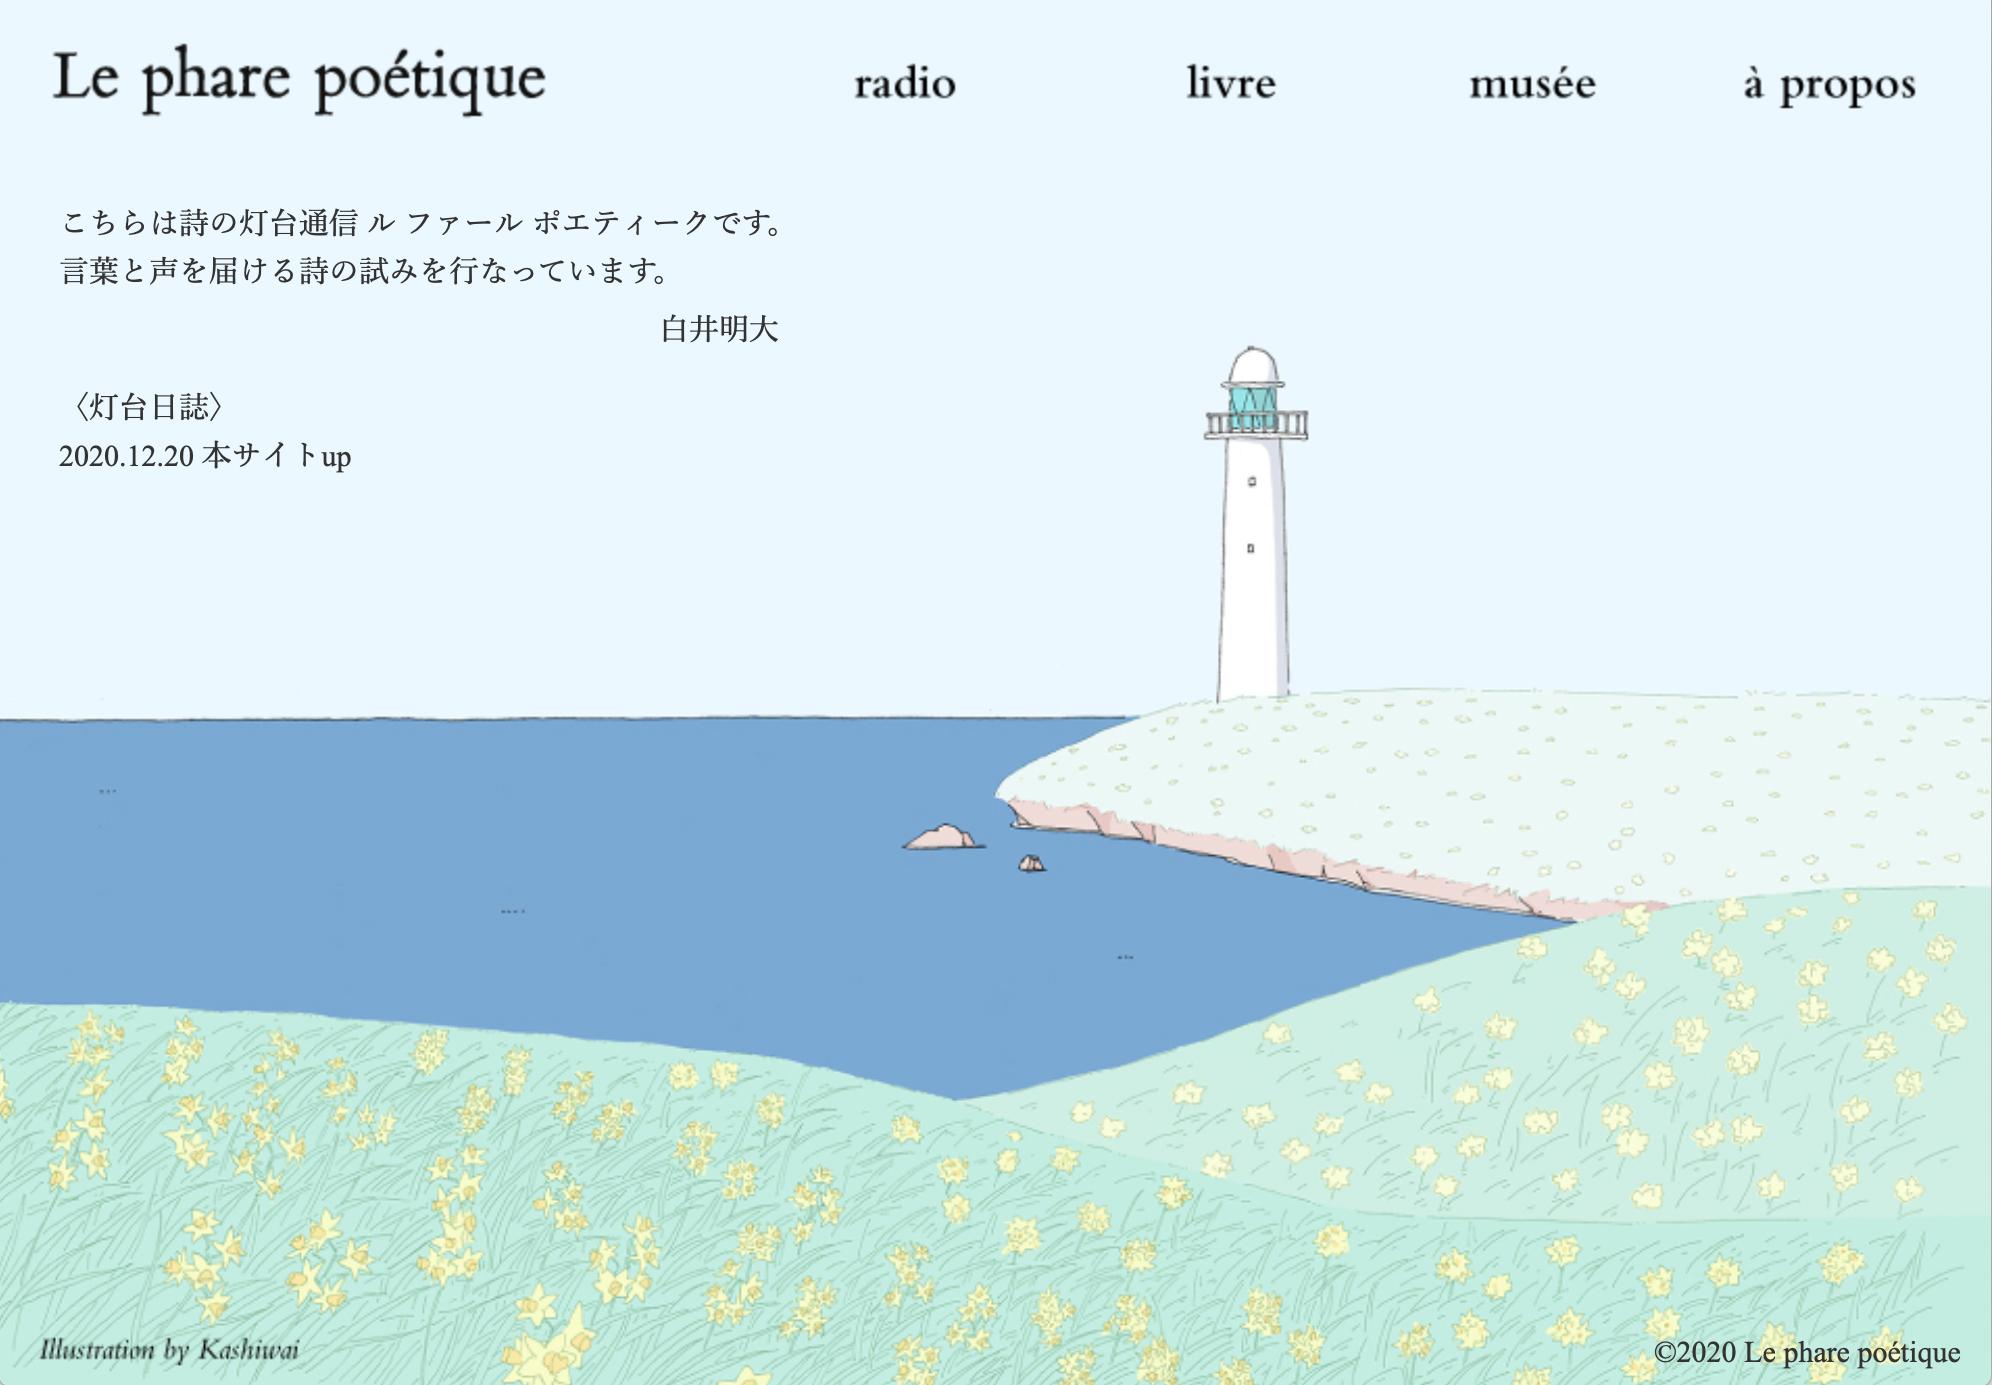 Le phare poétique 詩の灯台通信